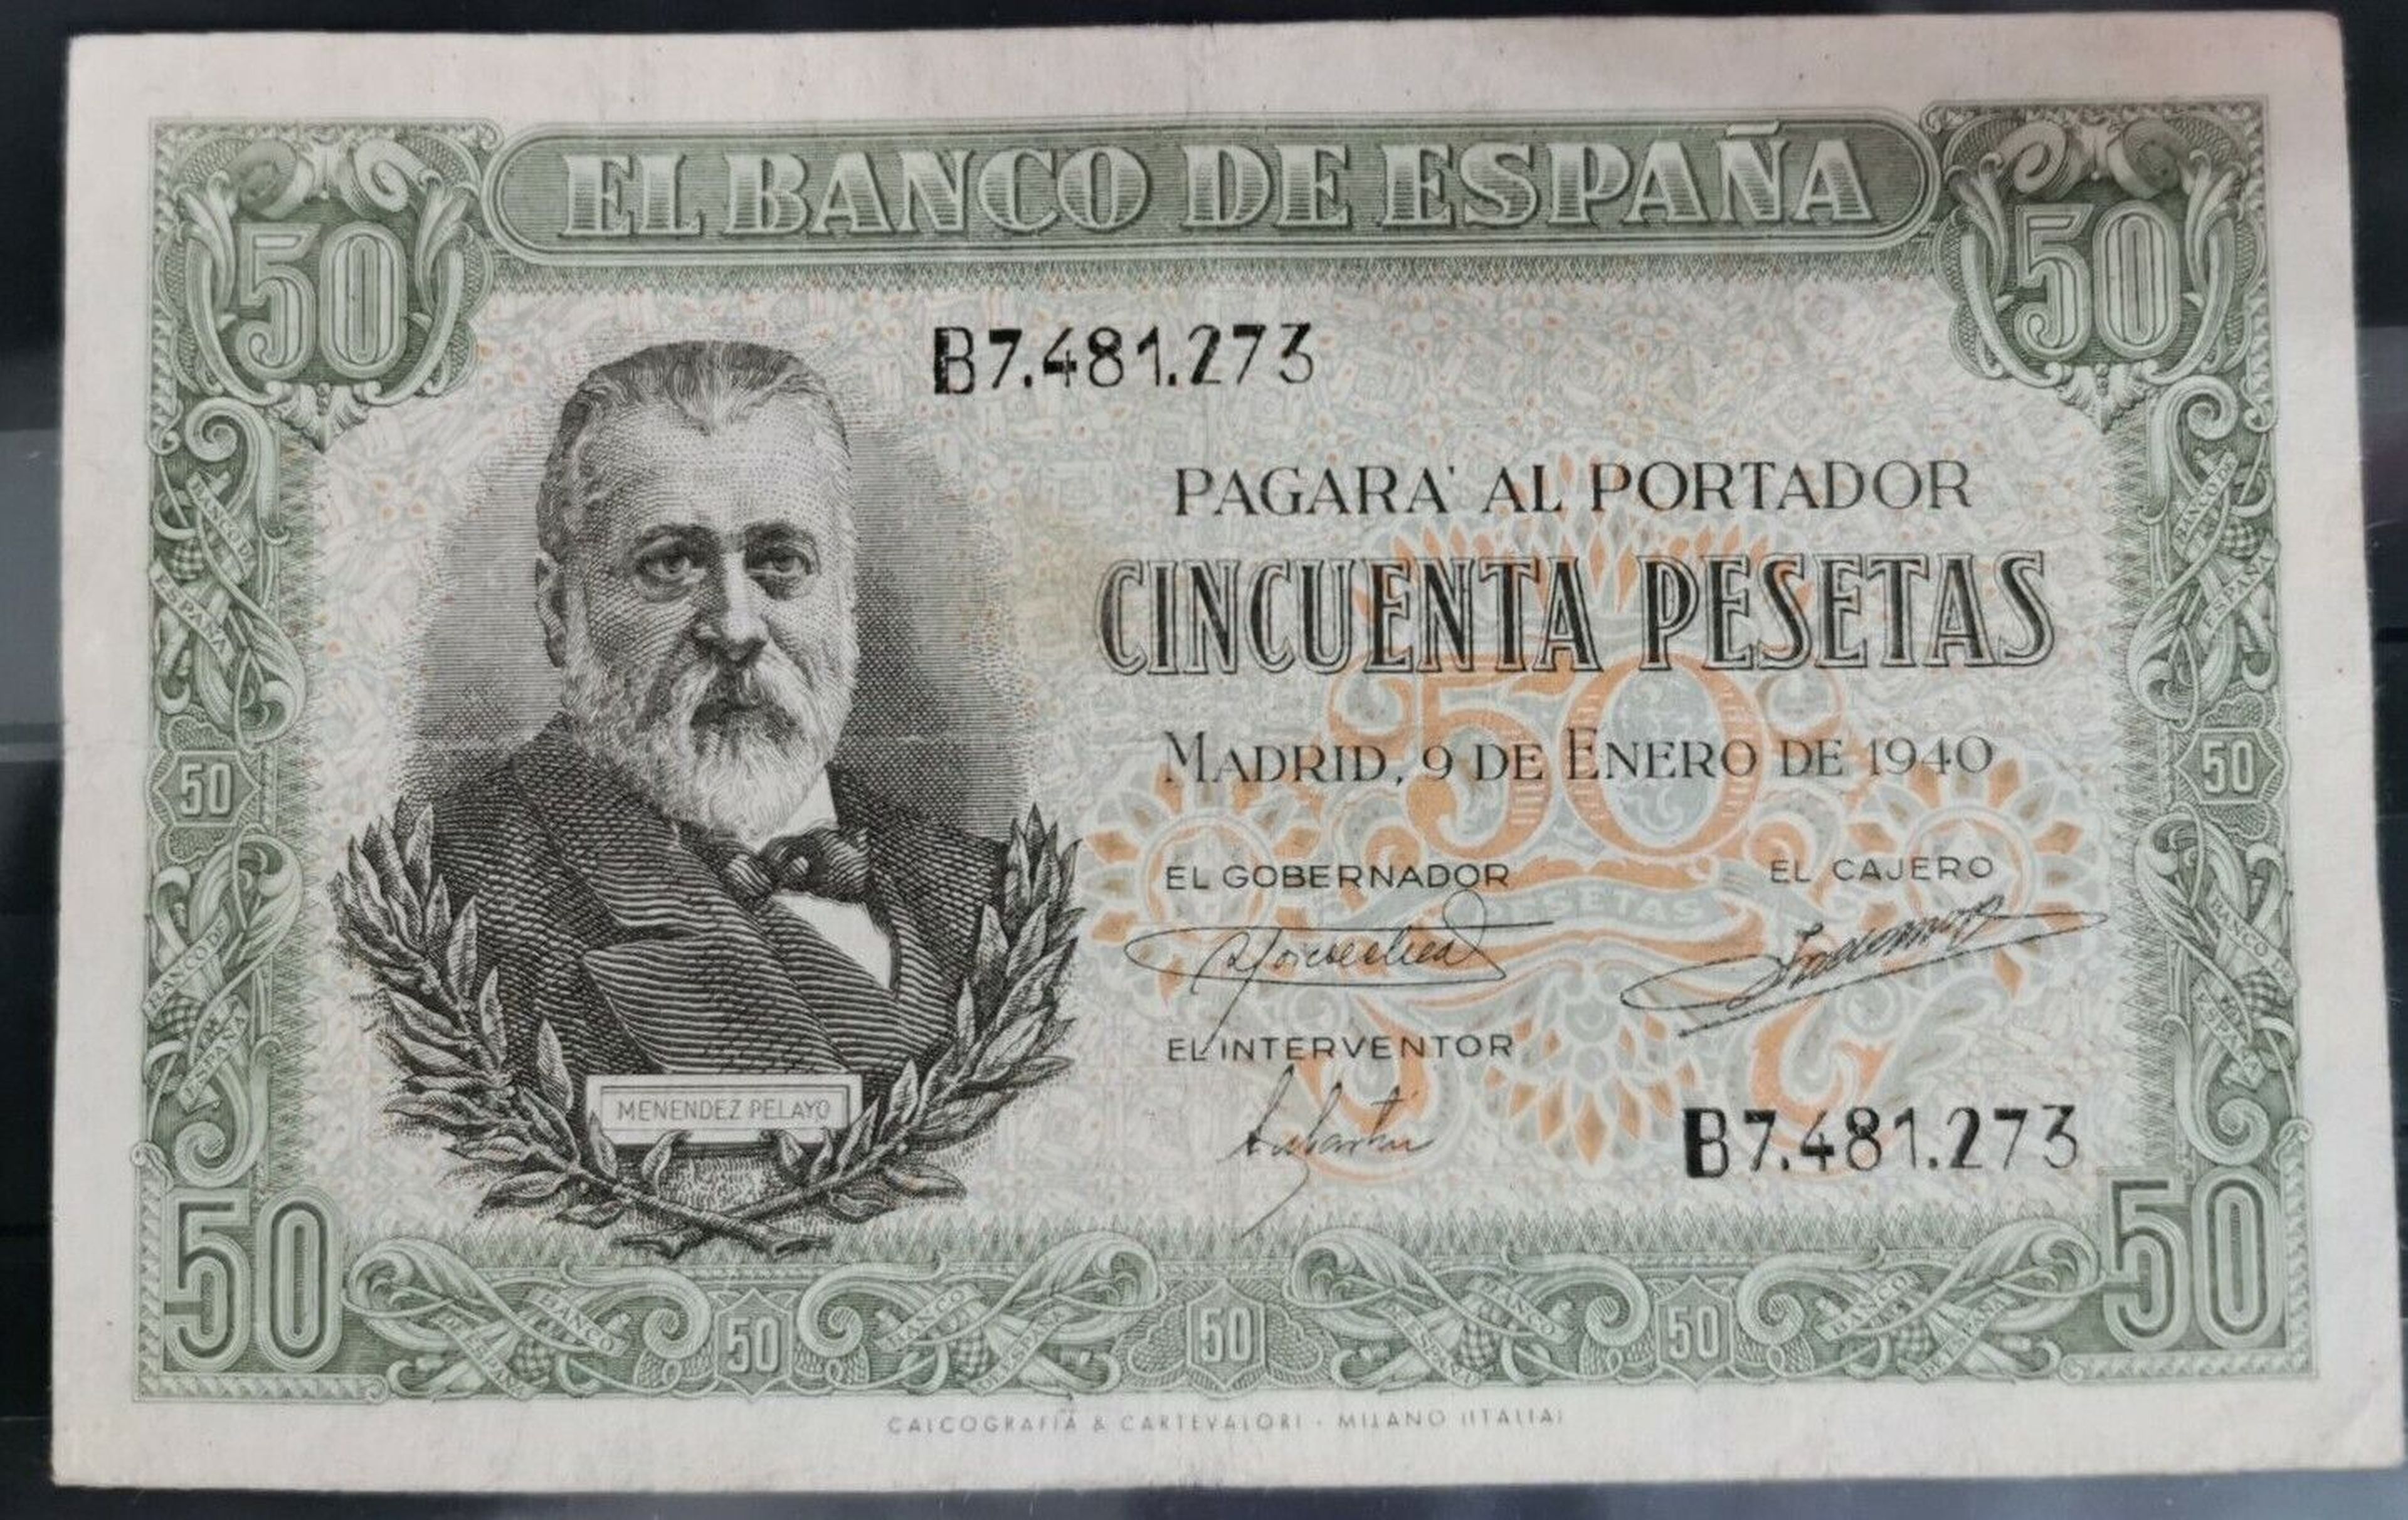 50 pesetas de 1940